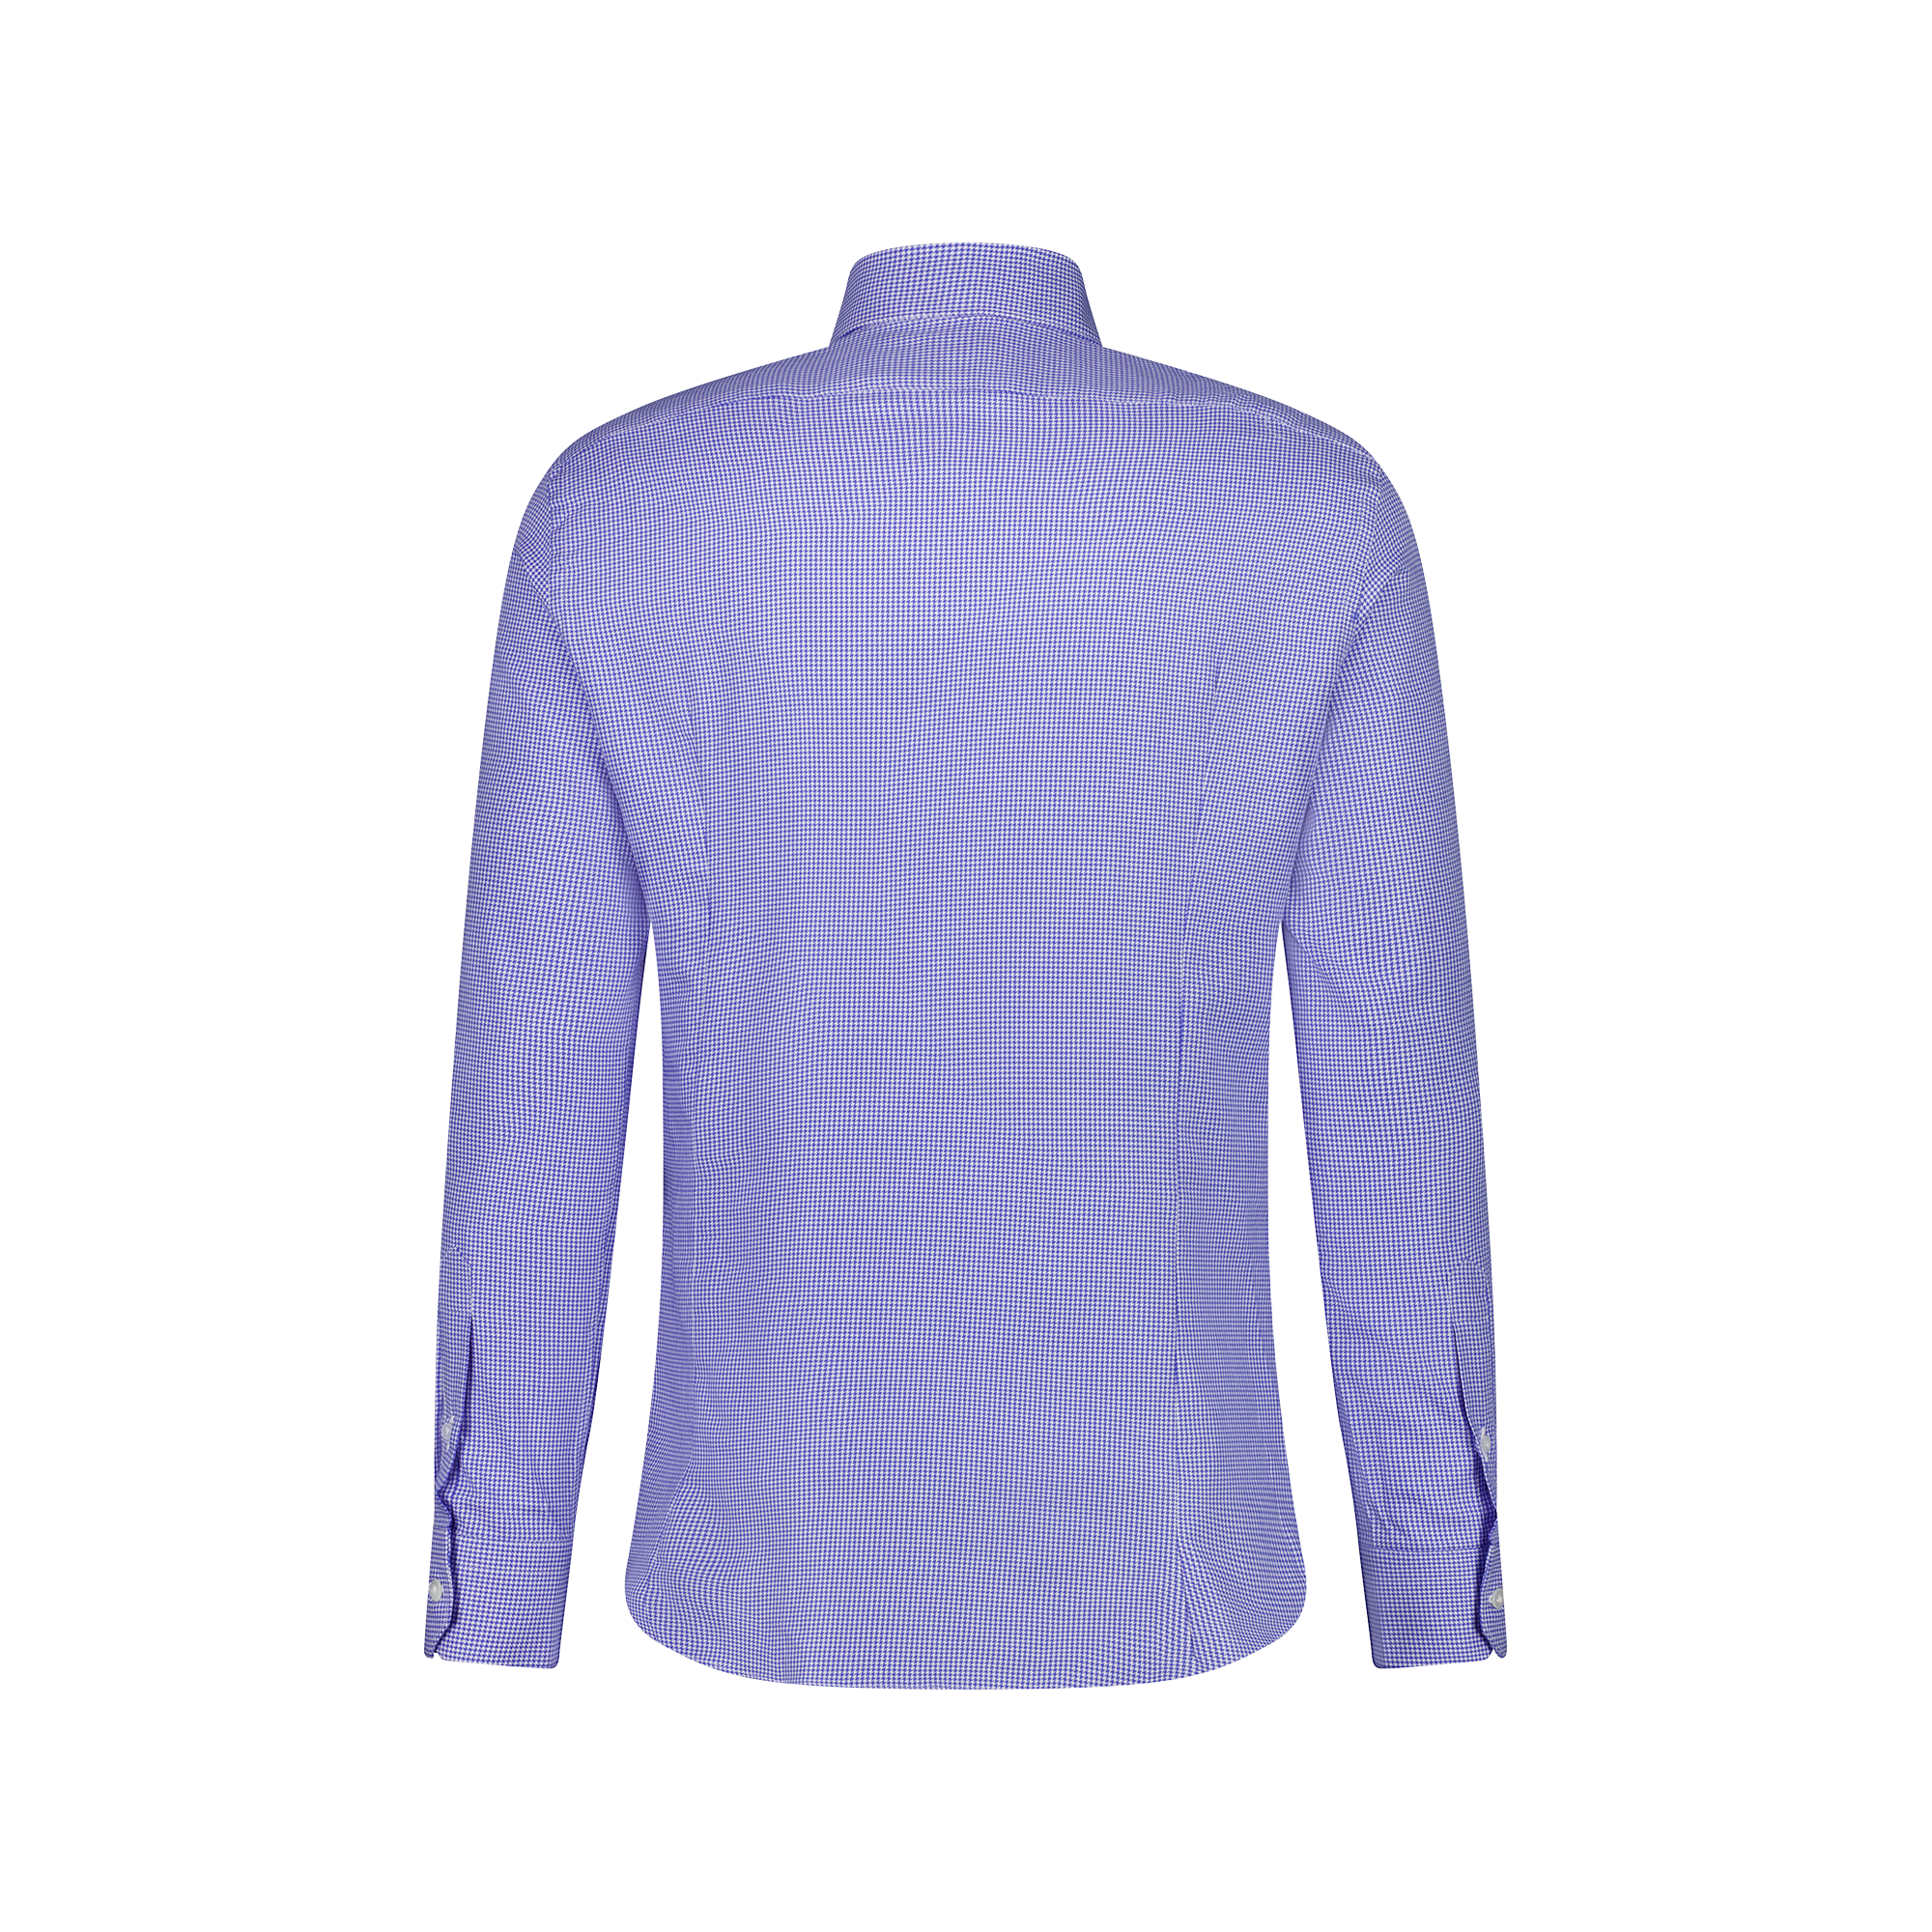 Cordone Elegance Max Shirt in LIGHT BLUE